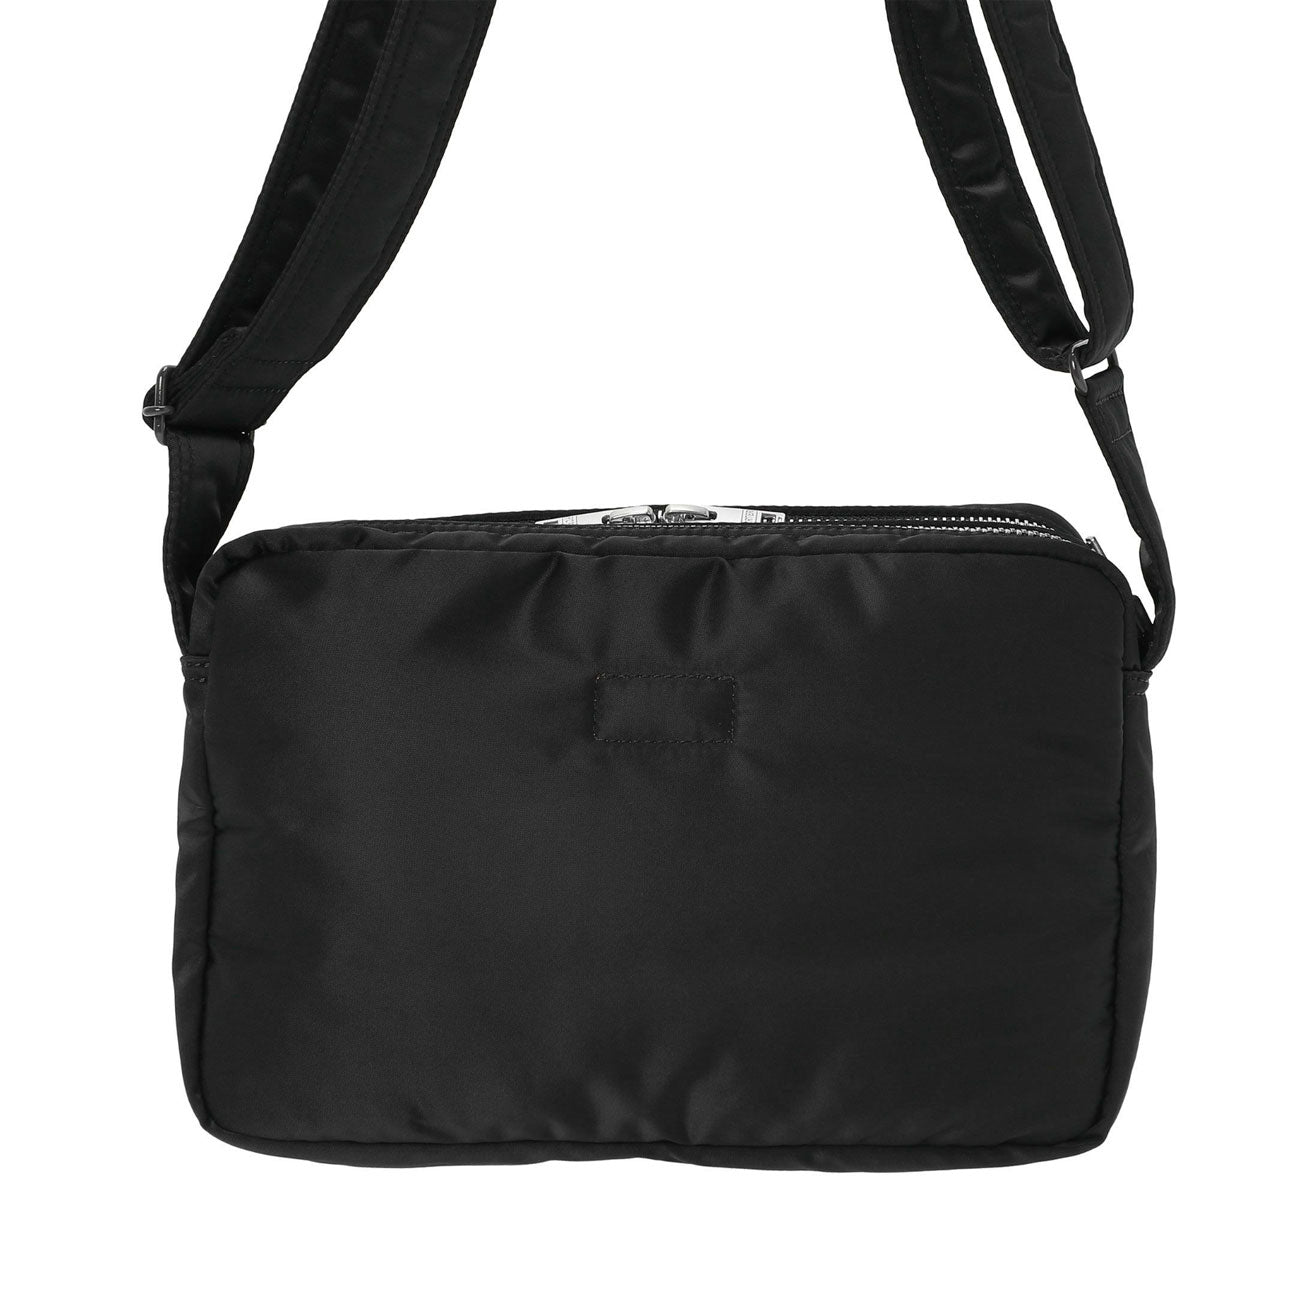 porter-yoshida & co. small tanker shoulder bag (black)